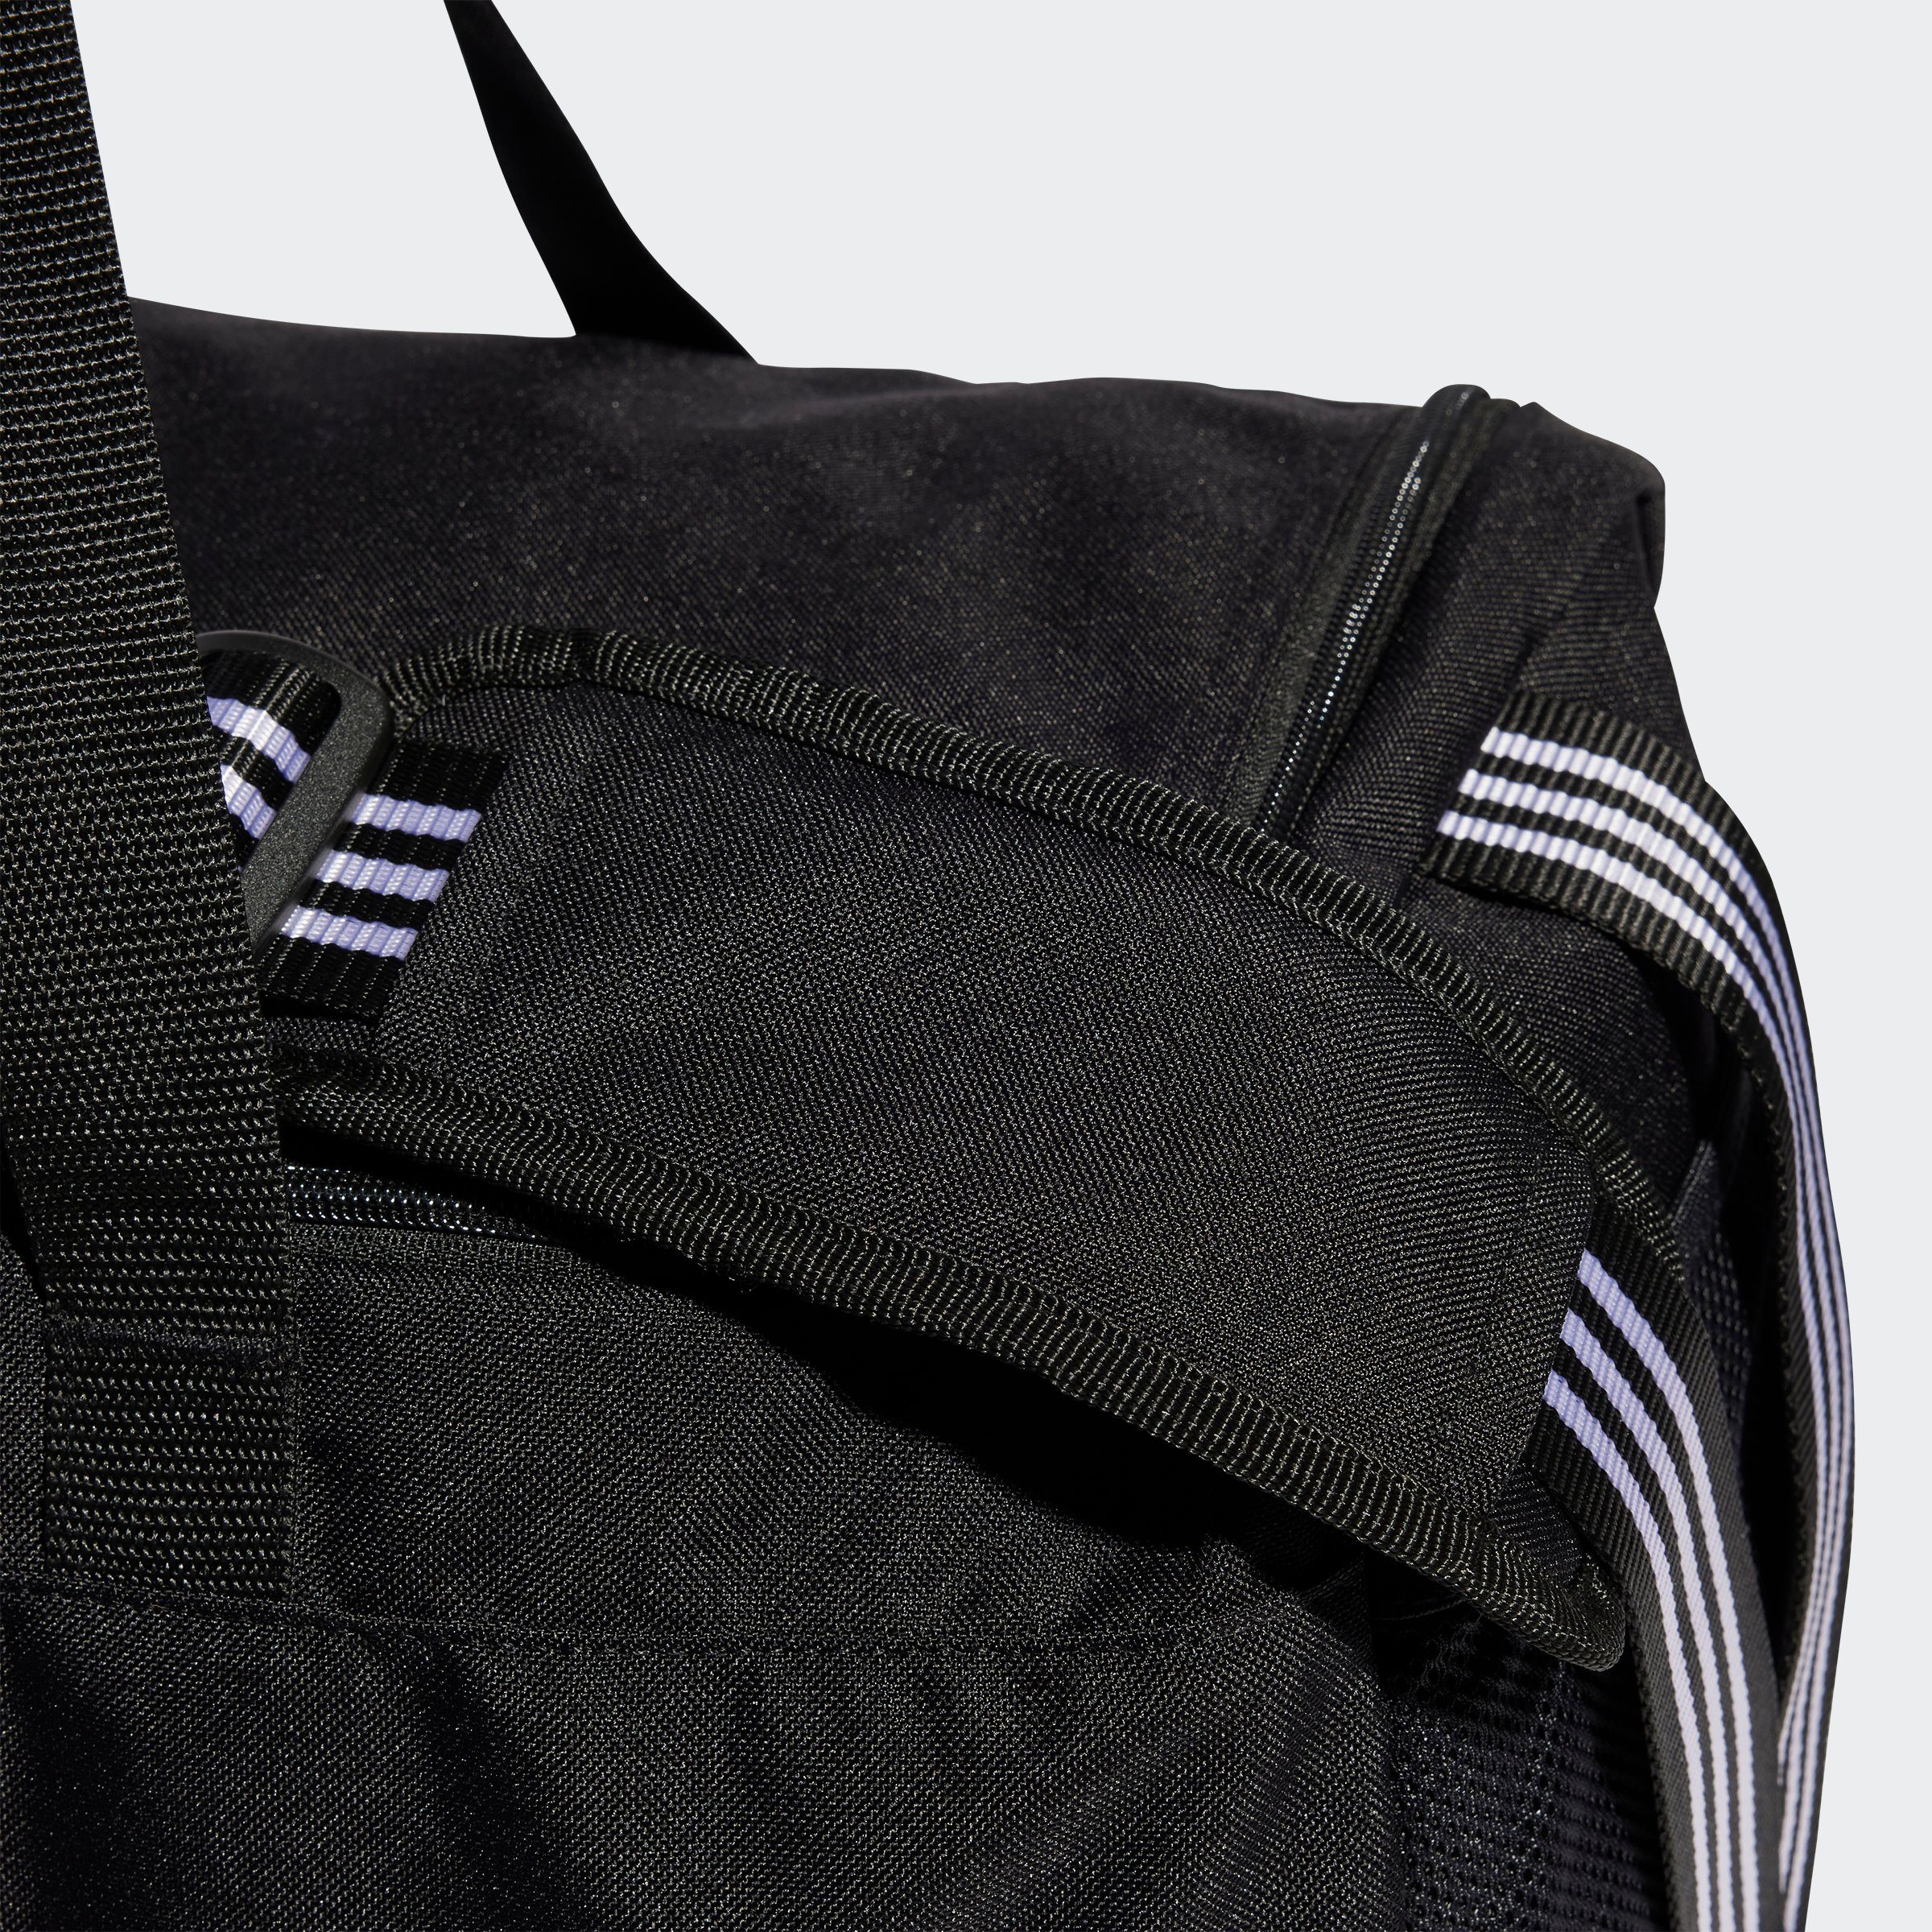 DUFFLE Originals BLACK BAG Sporttasche adidas